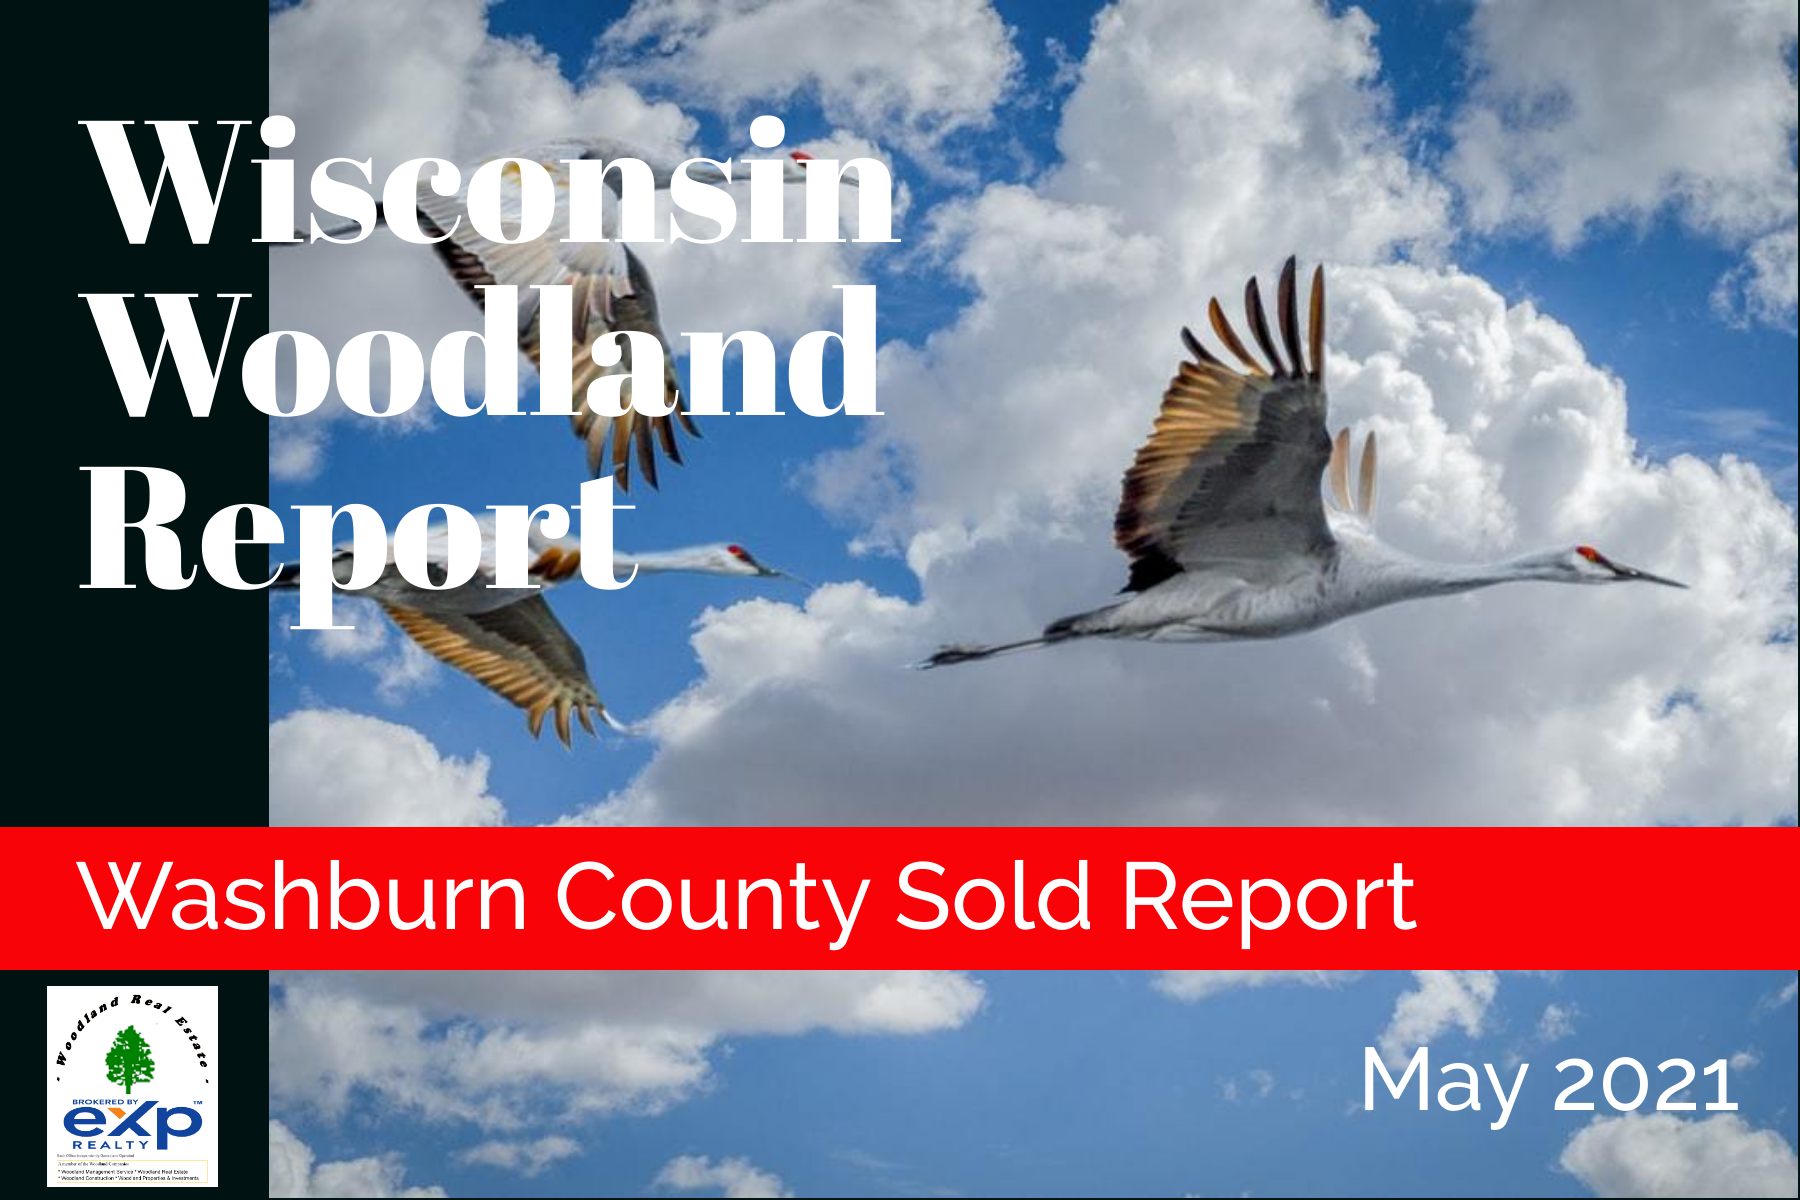 Washburn_05-21_-_Woodland-Reports-1800x1200-layout1775-1g9qsht.png